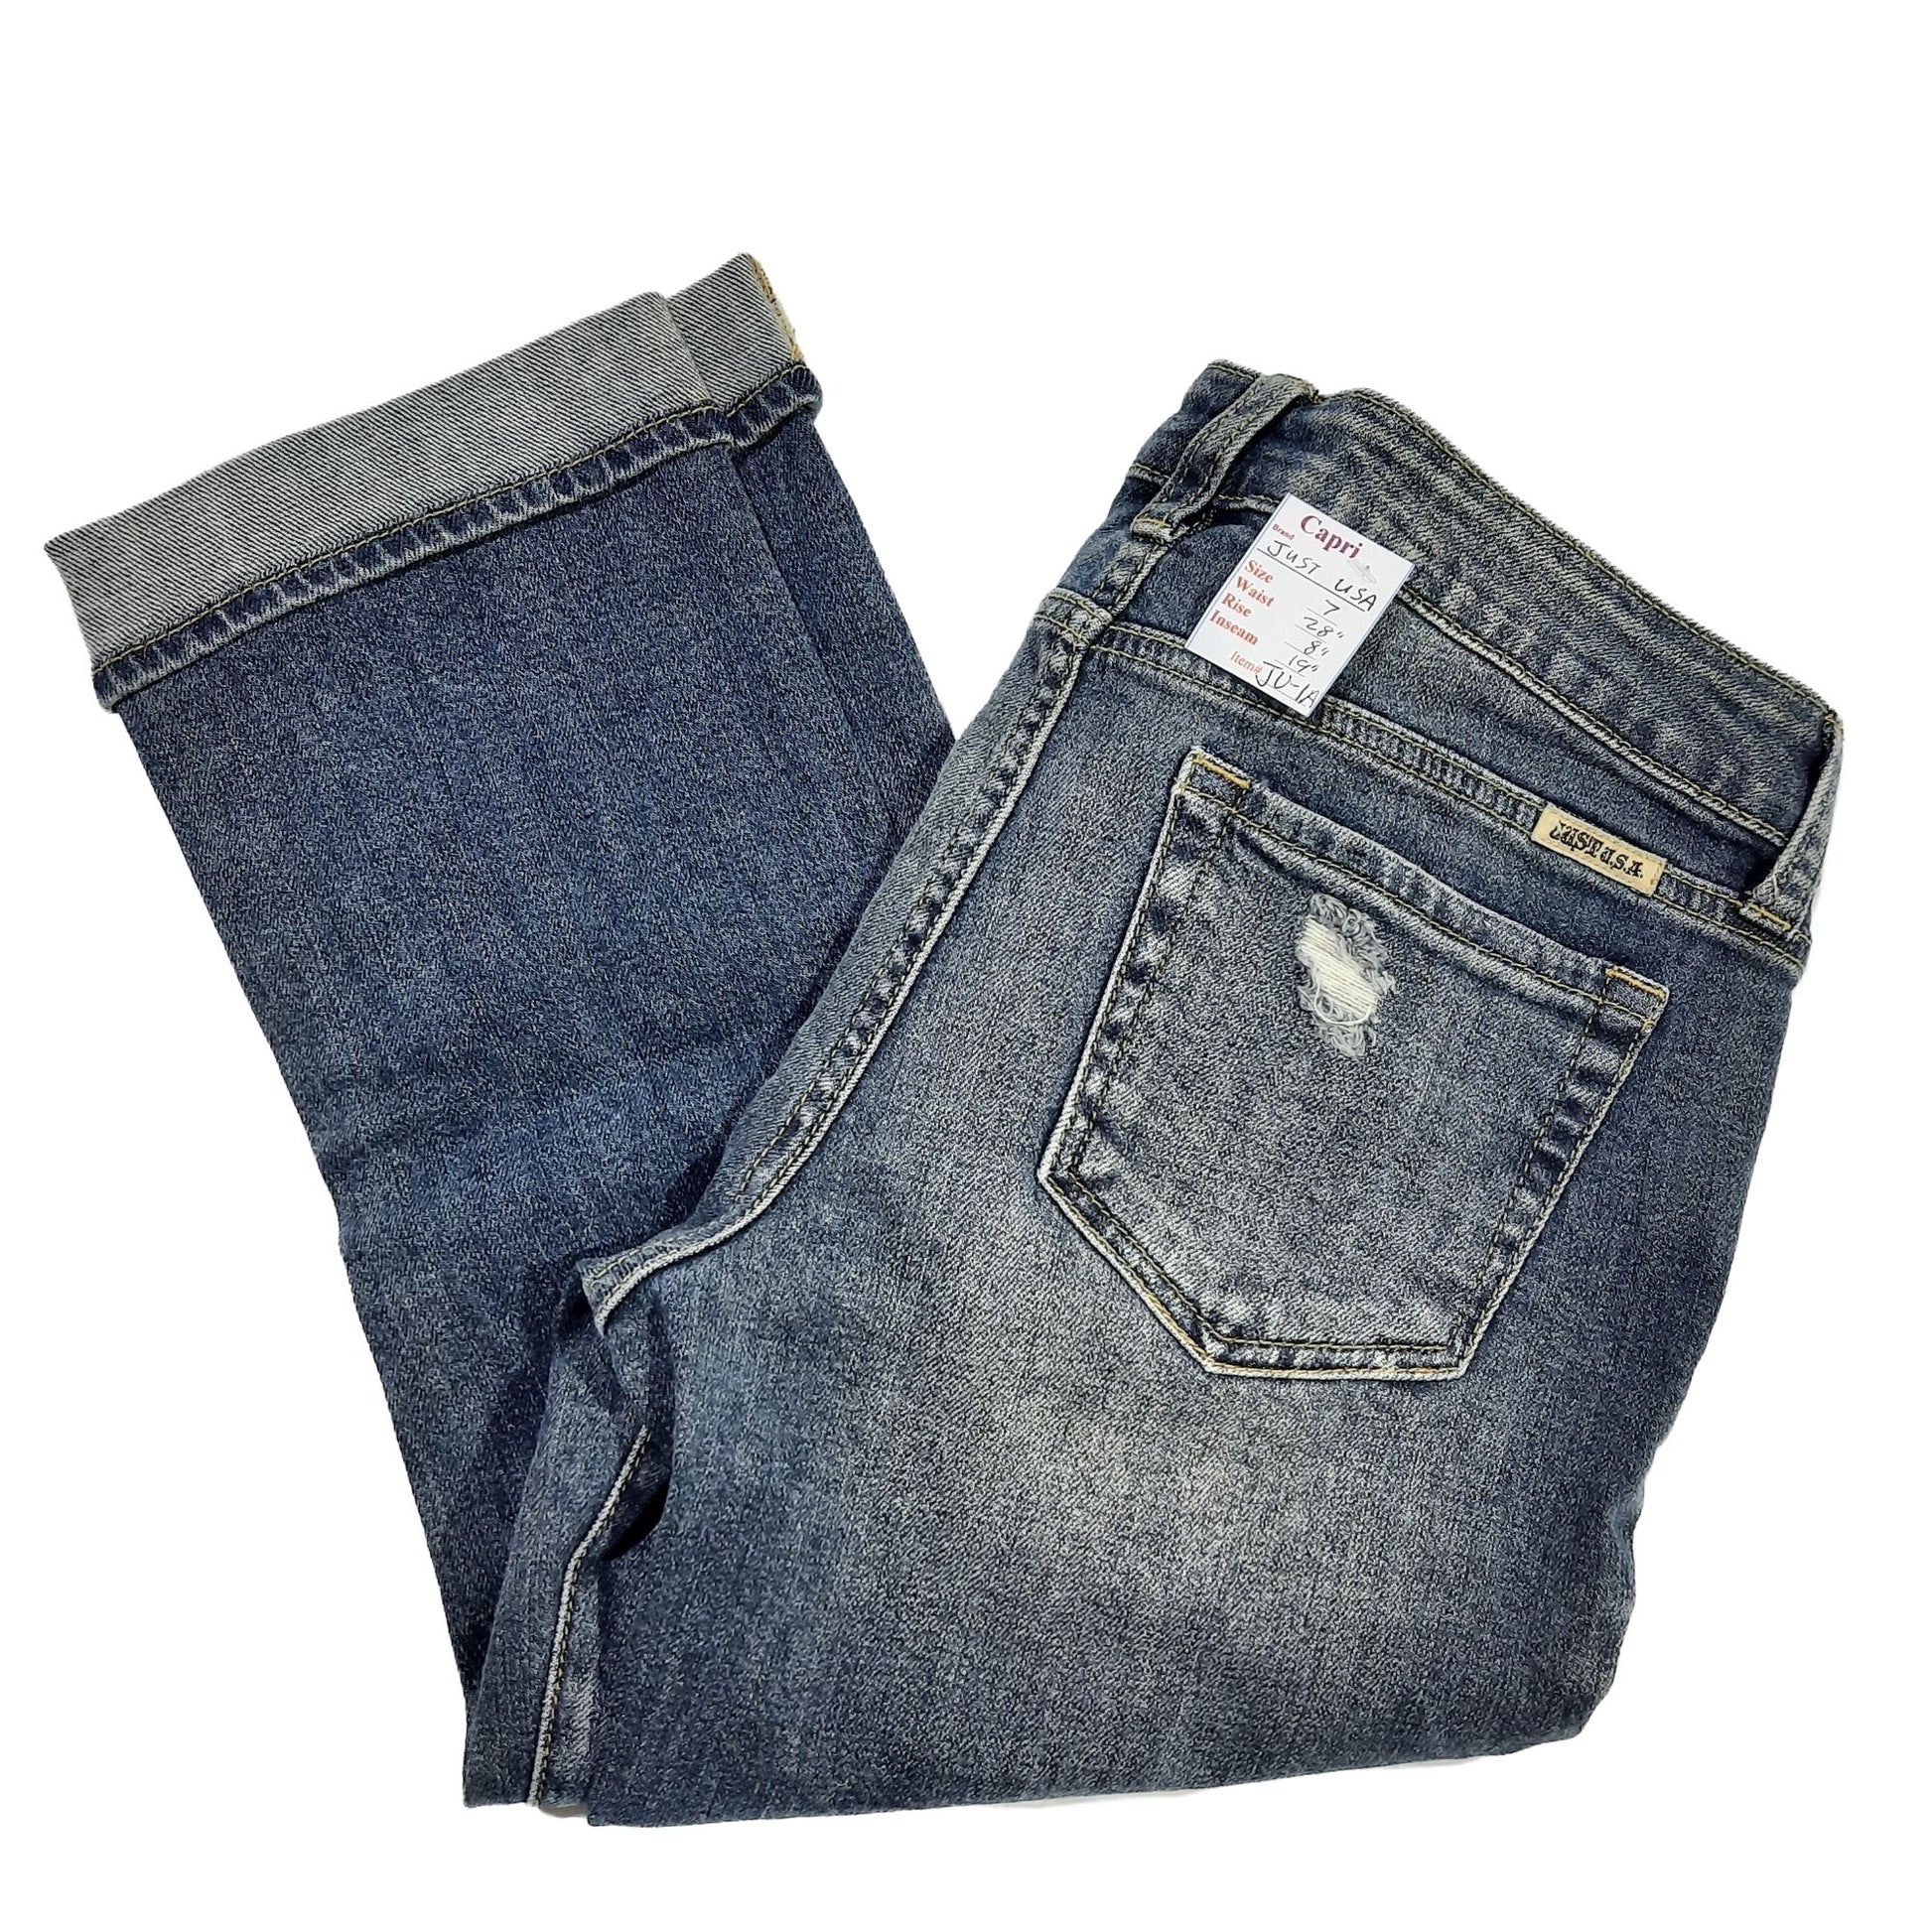 NWT Women's Capri Jeans Size 7 Just USA – Denim and Jewelry